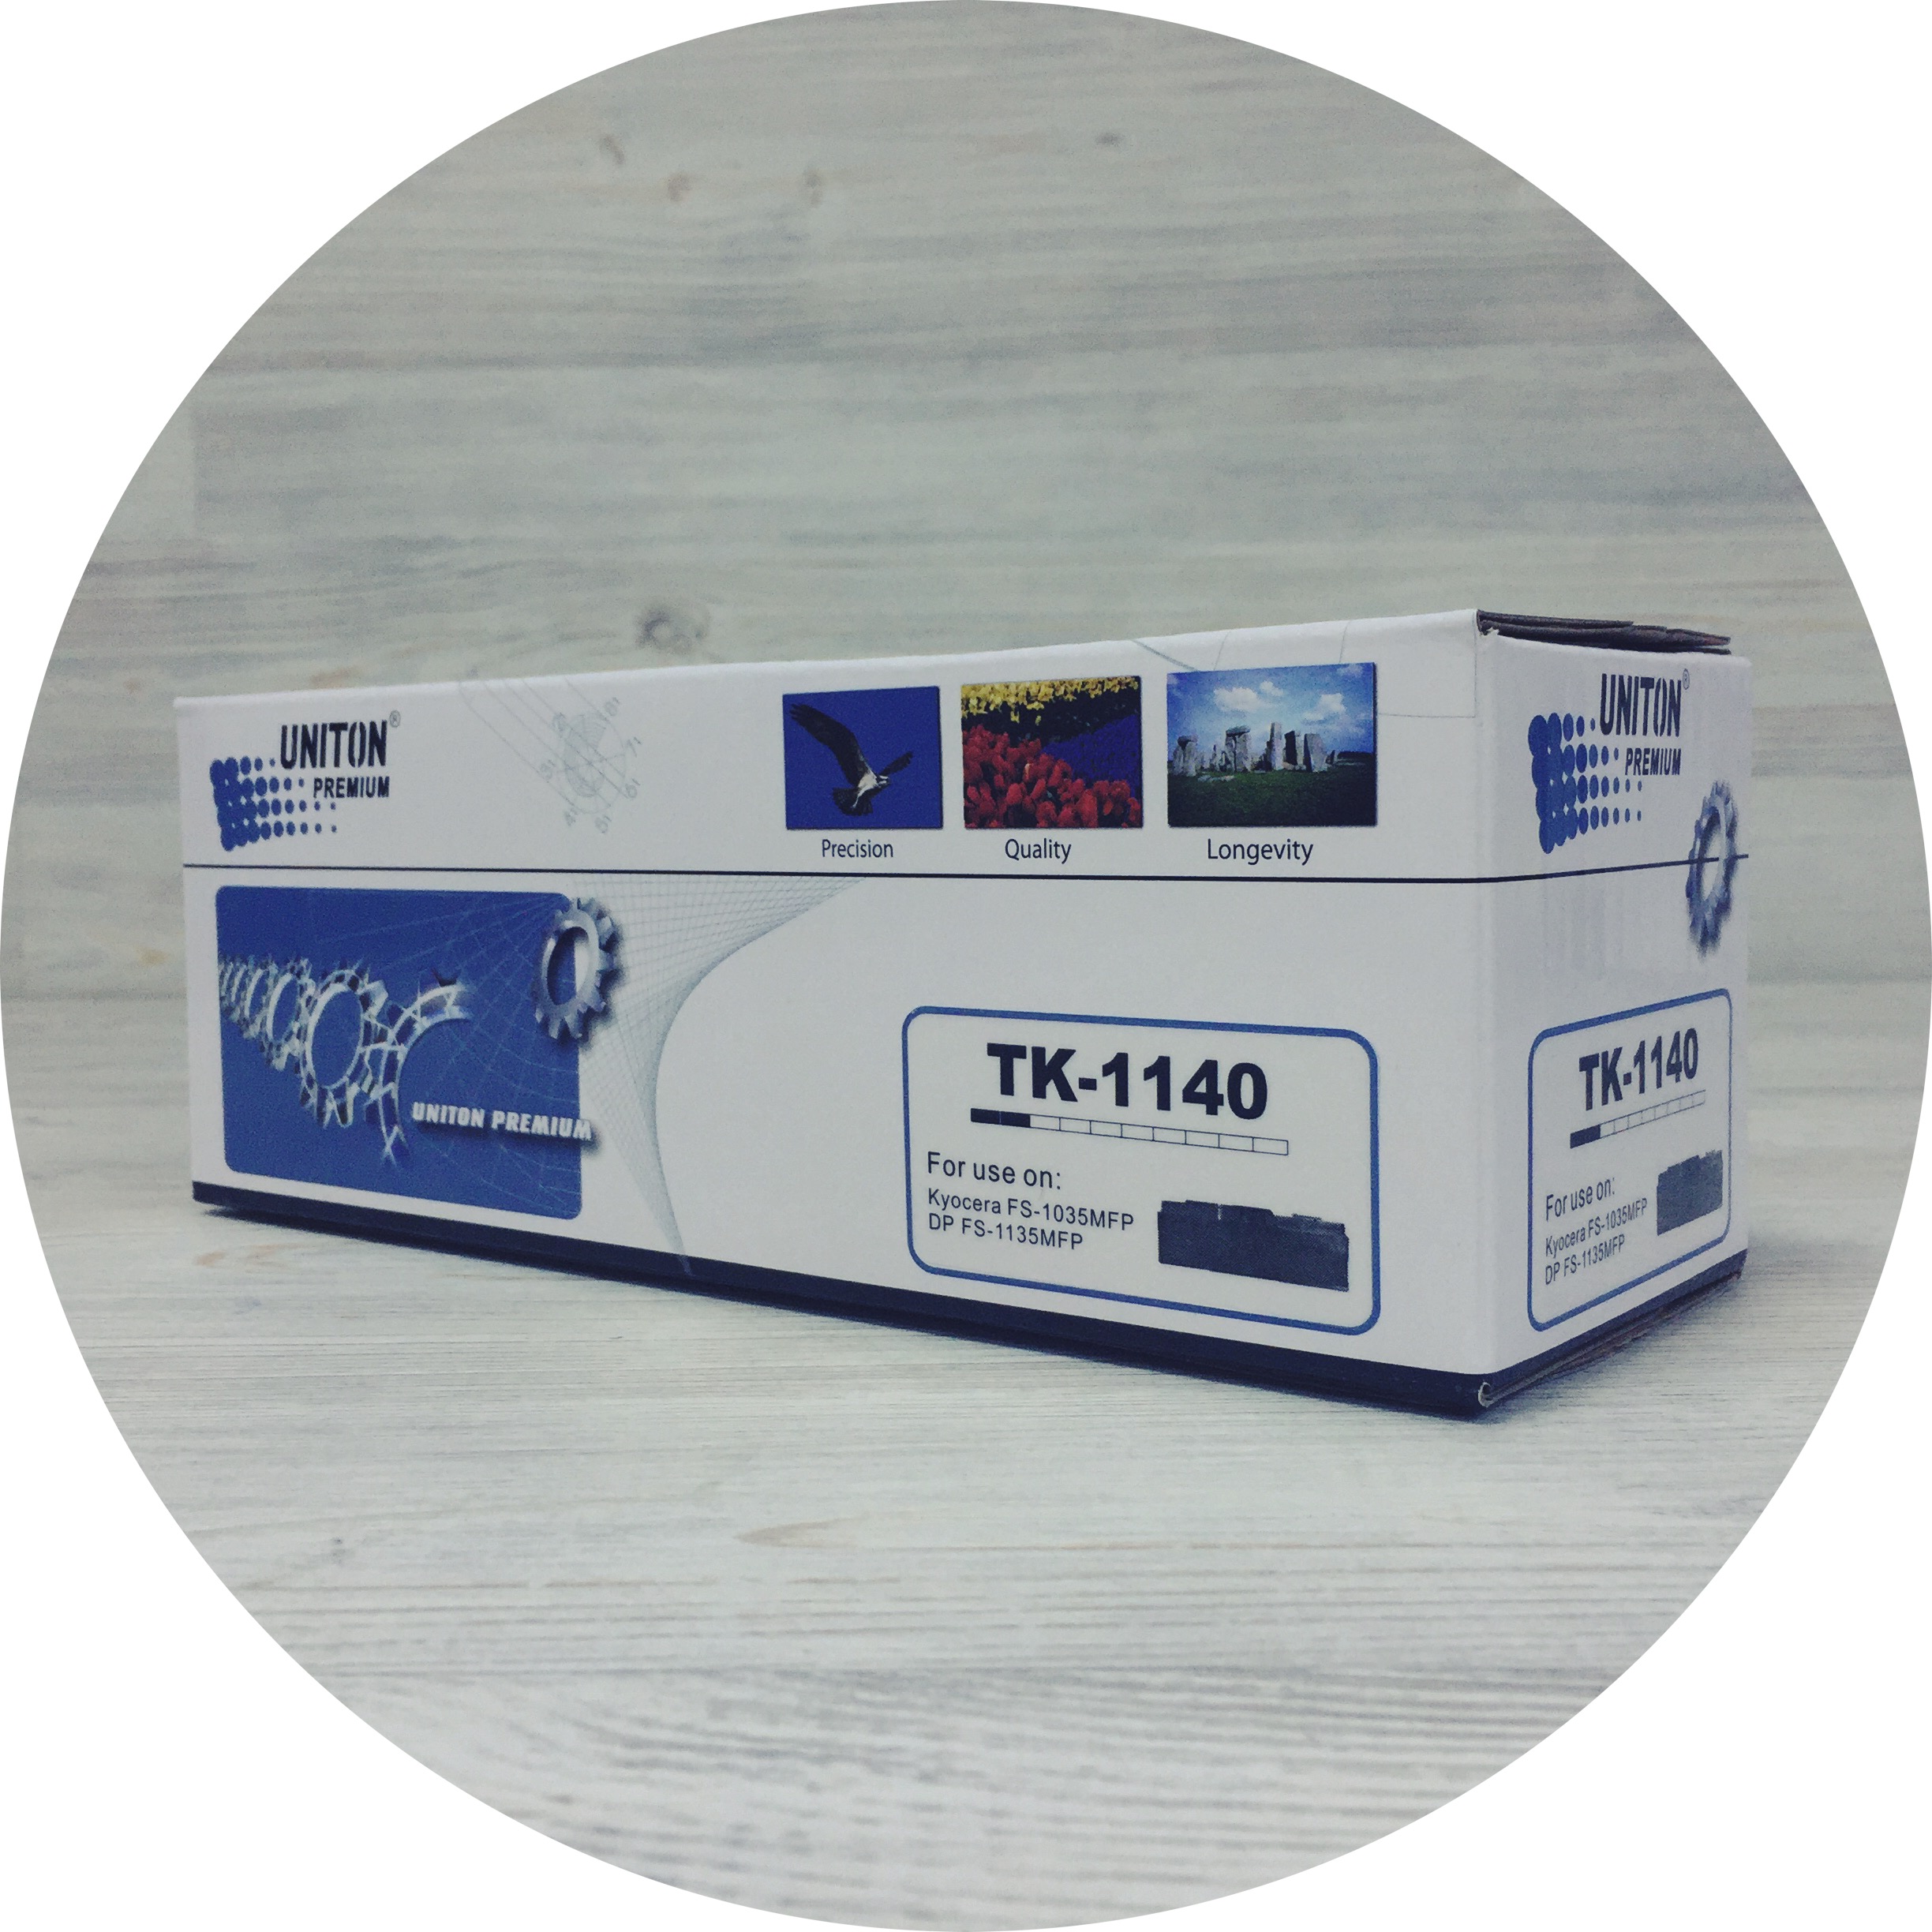   ()  Kyocera TK-1140  (7 200 .)   (Uniton Premium) 